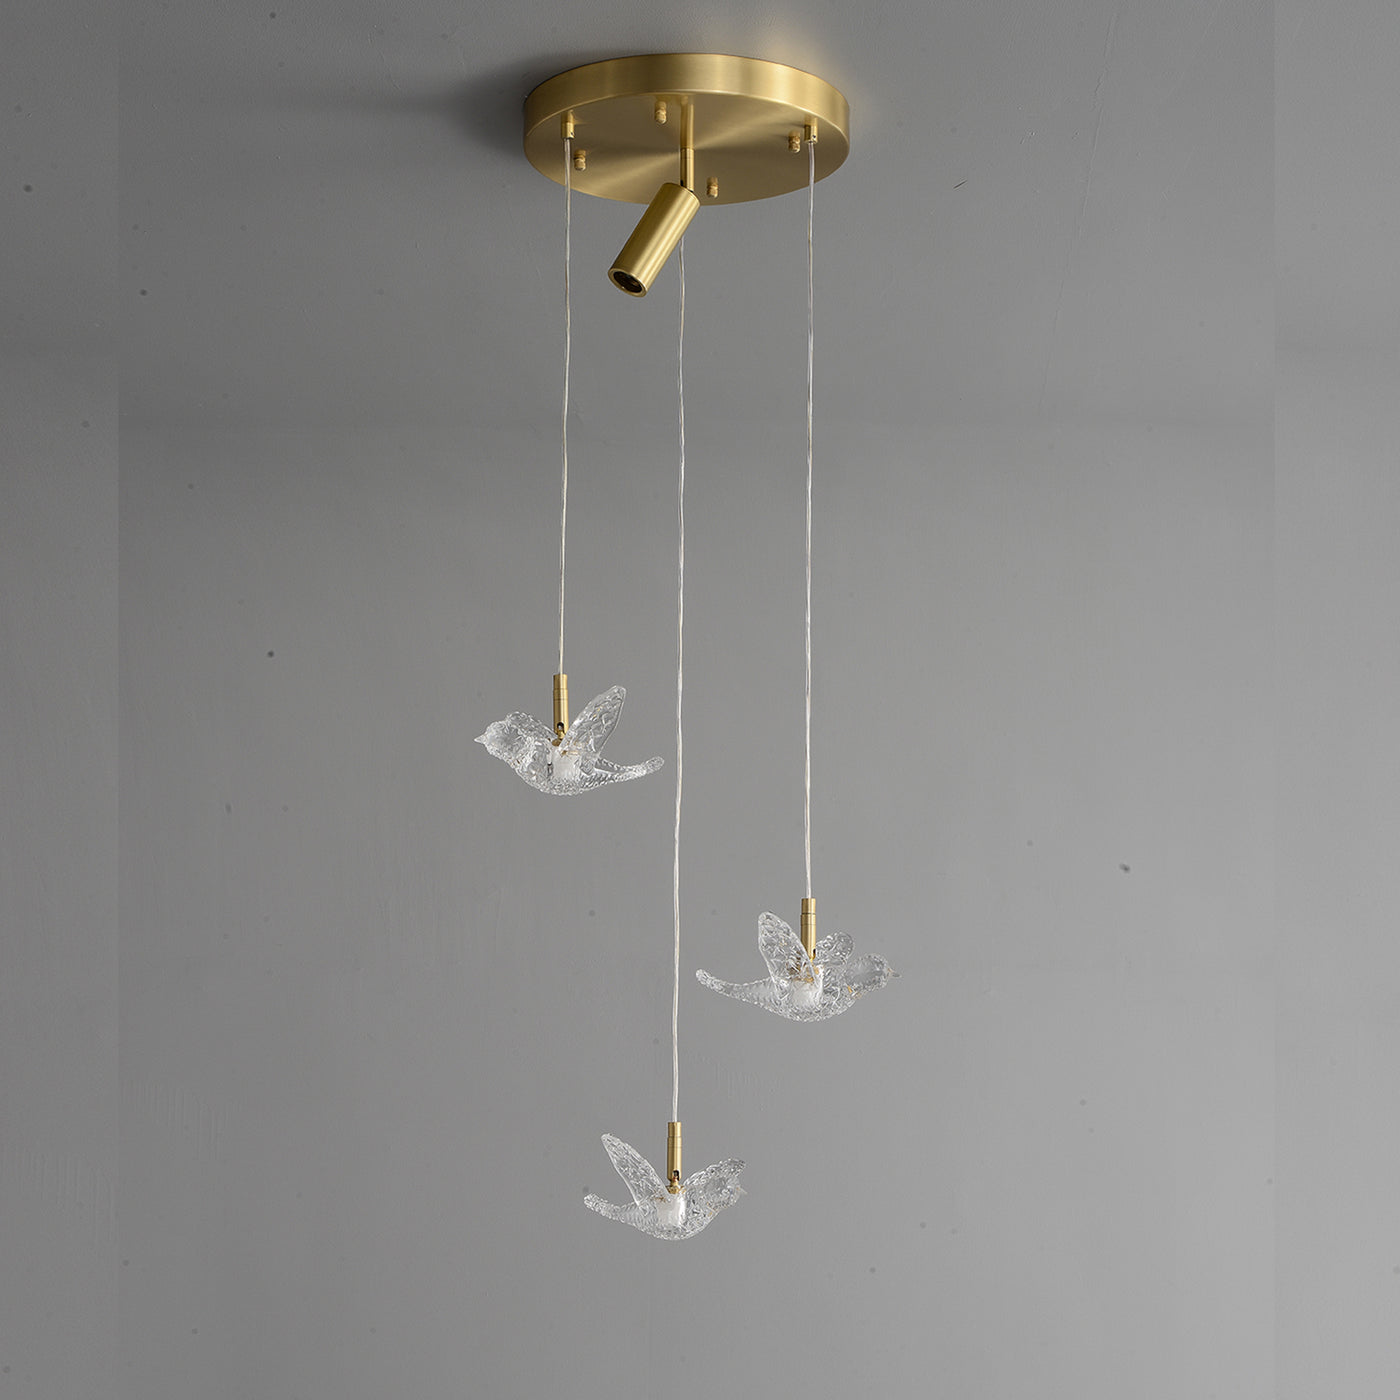 Creative bird chandelier